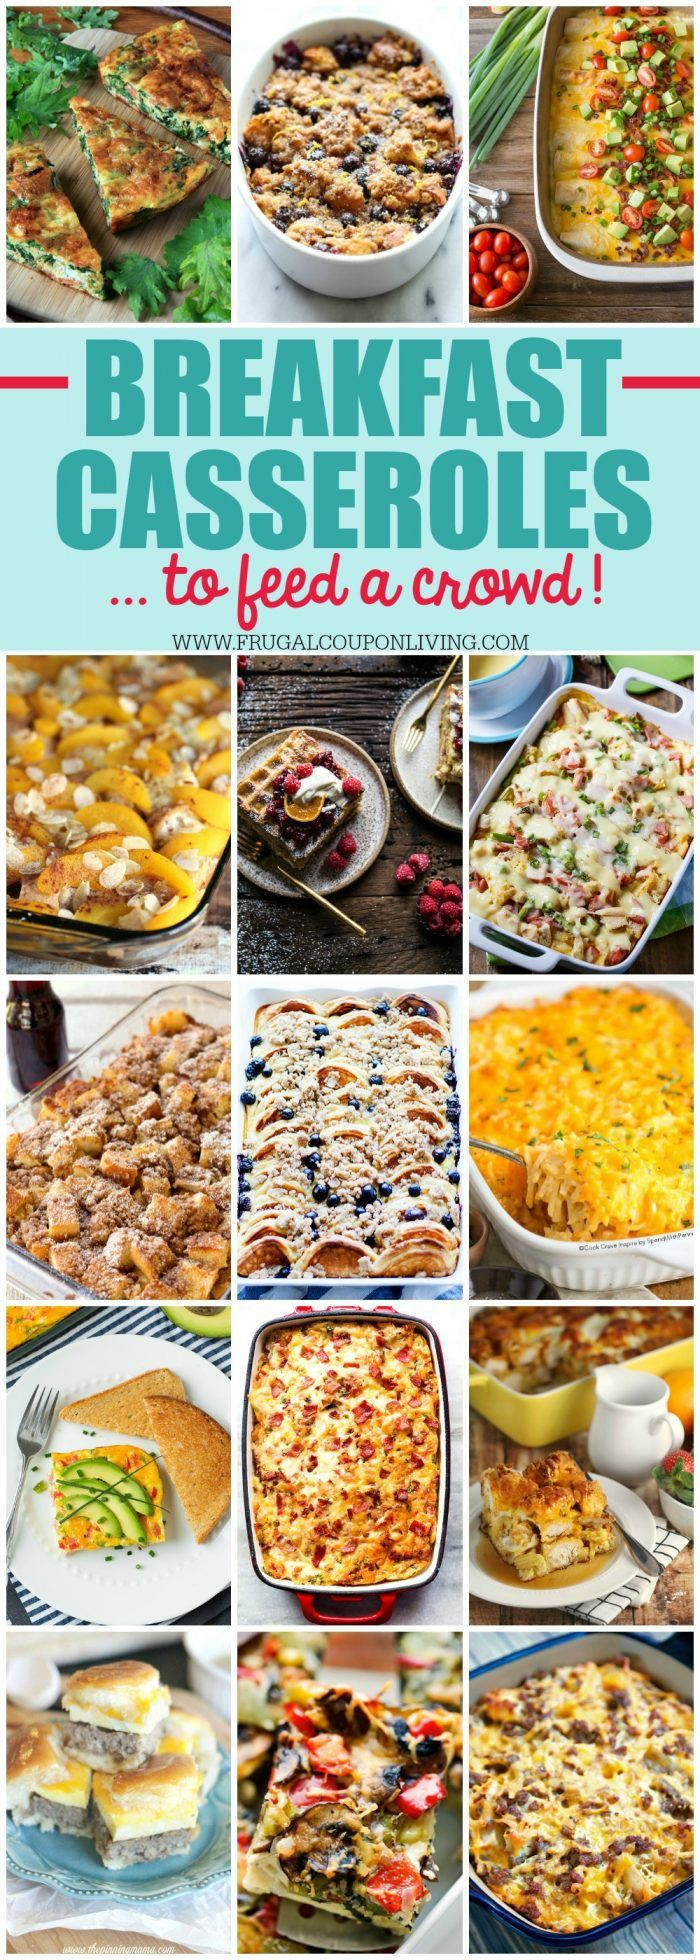 Christmas Dinner Ideas For Large Group
 Best 25 group food ideas on Pinterest